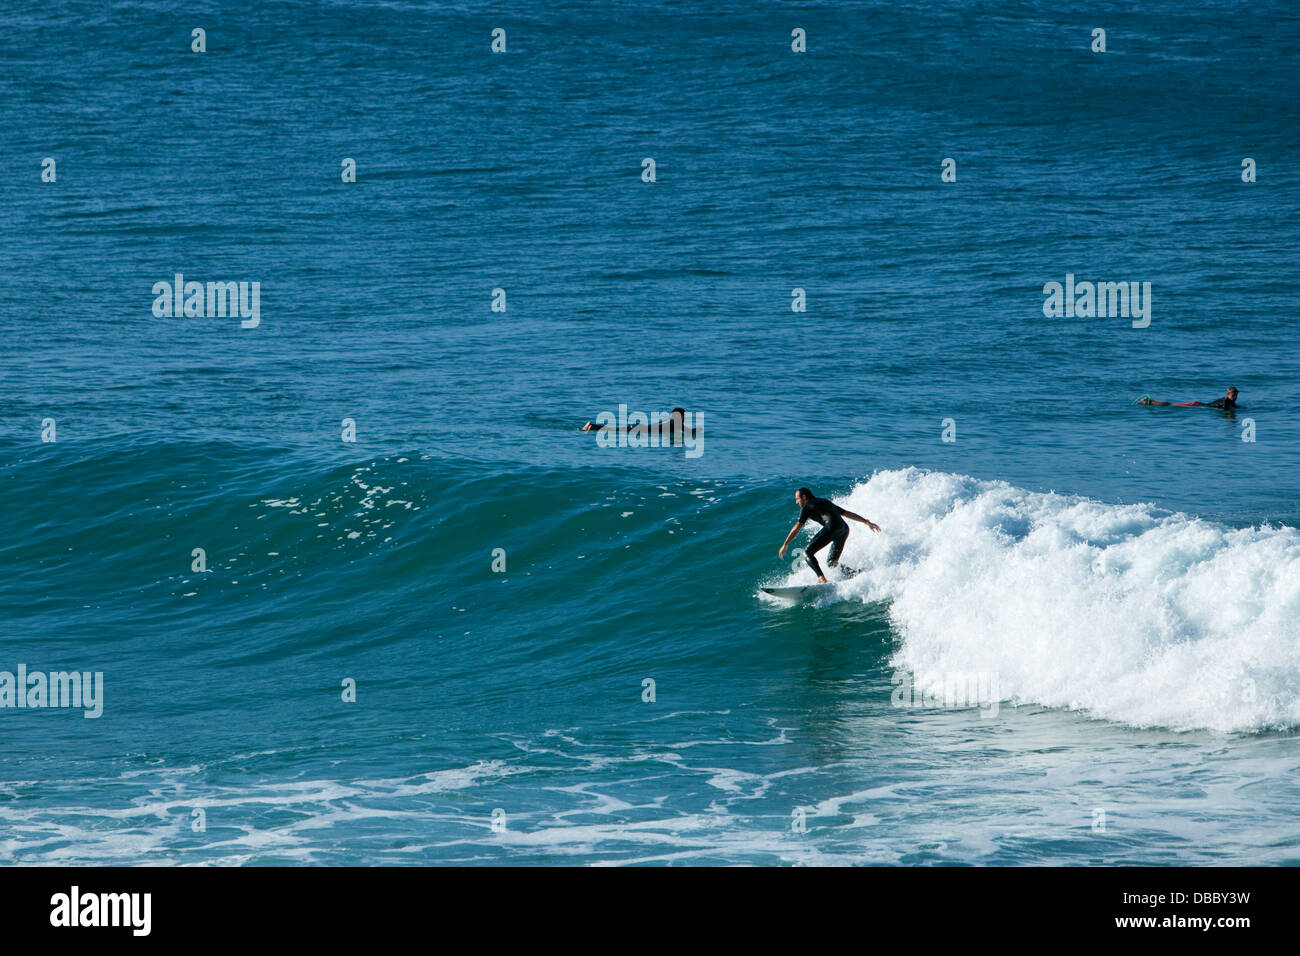 Surfer riding a wave. Coolangatta, Gold Coast, Queensland, Australia Stock Photo